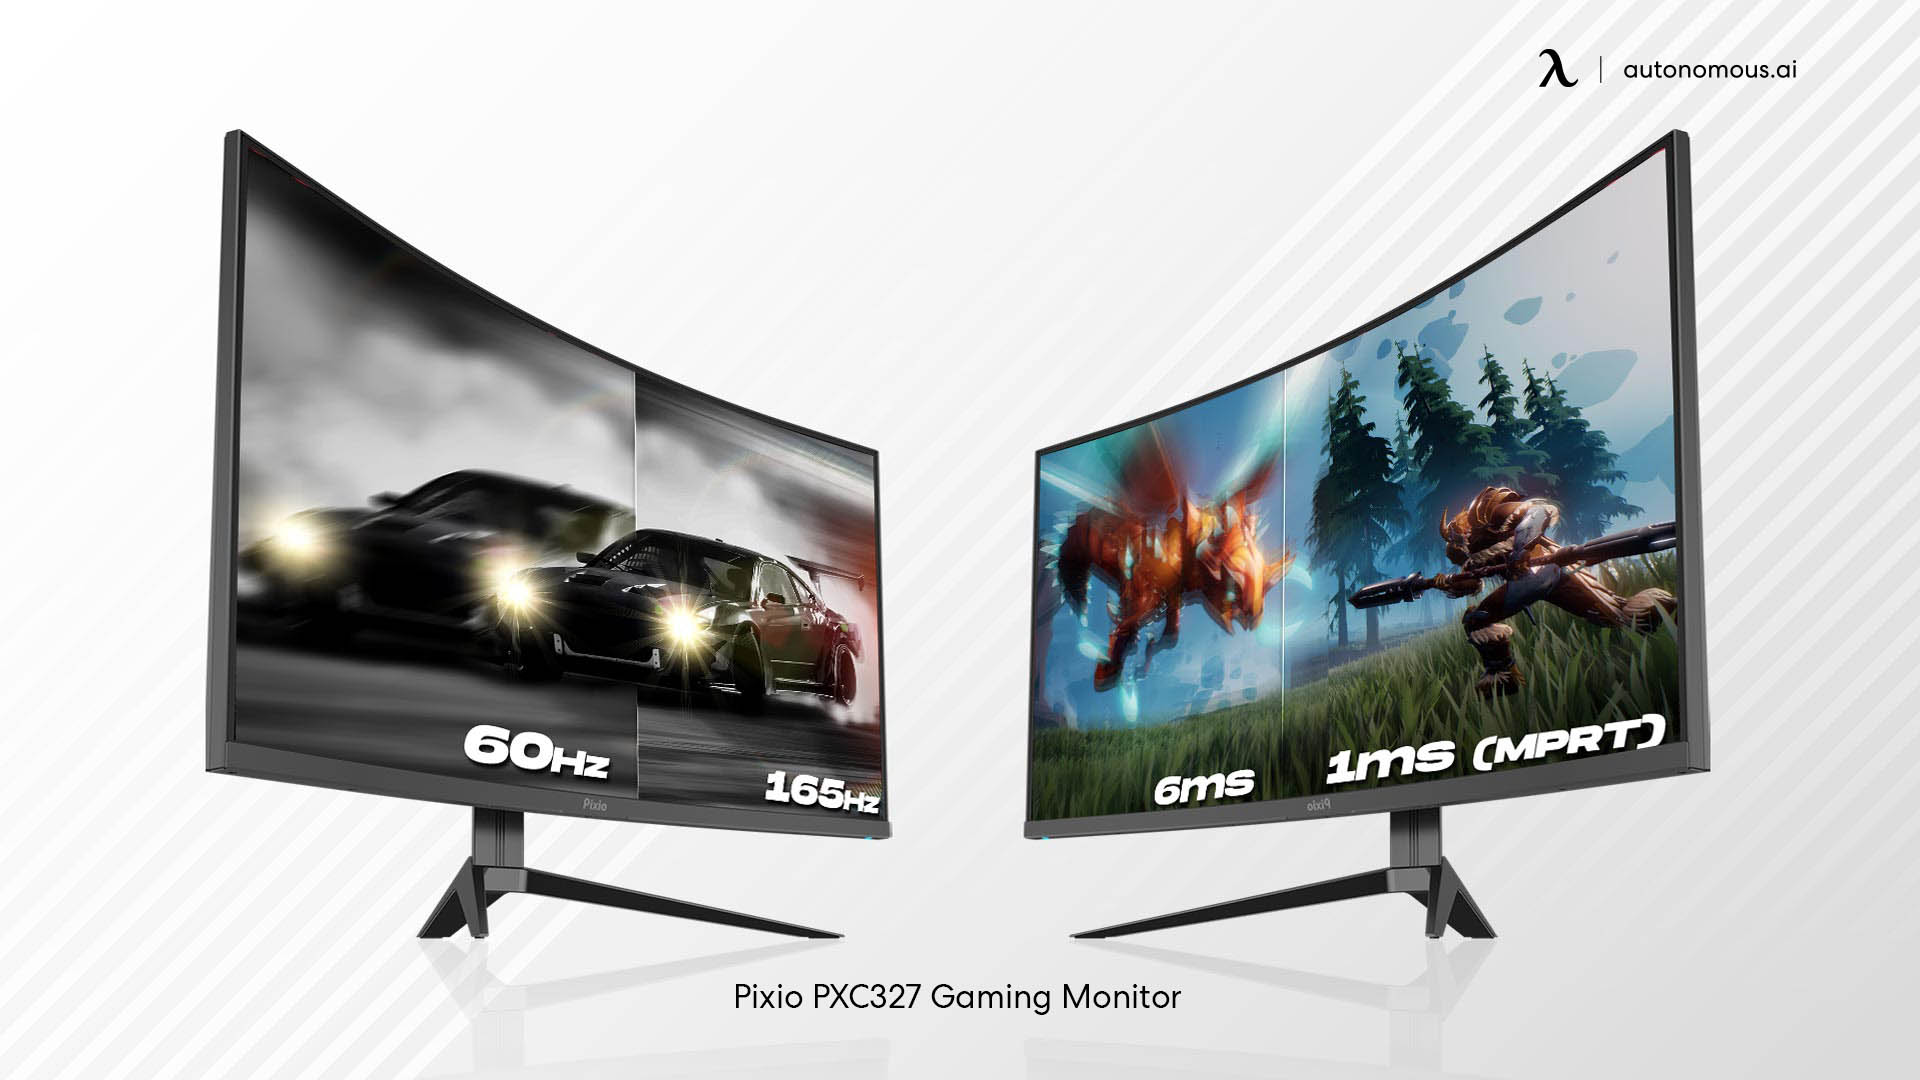 PXC327 Pixio gaming monitor